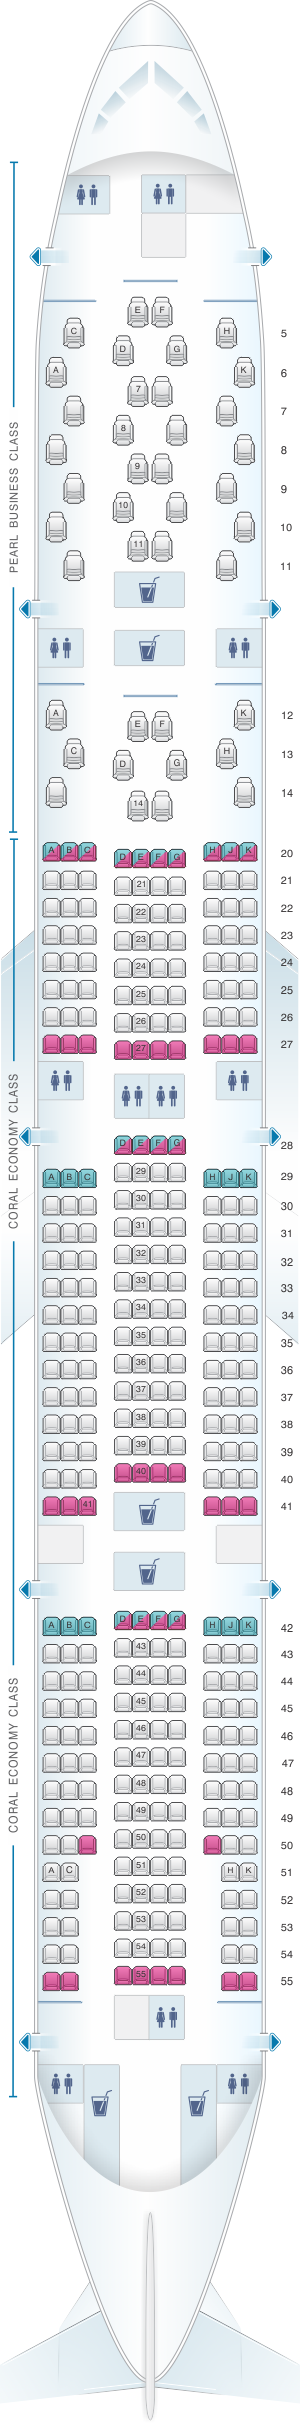 Seat map for Etihad Airways Boeing B777 300ER 2 class V2